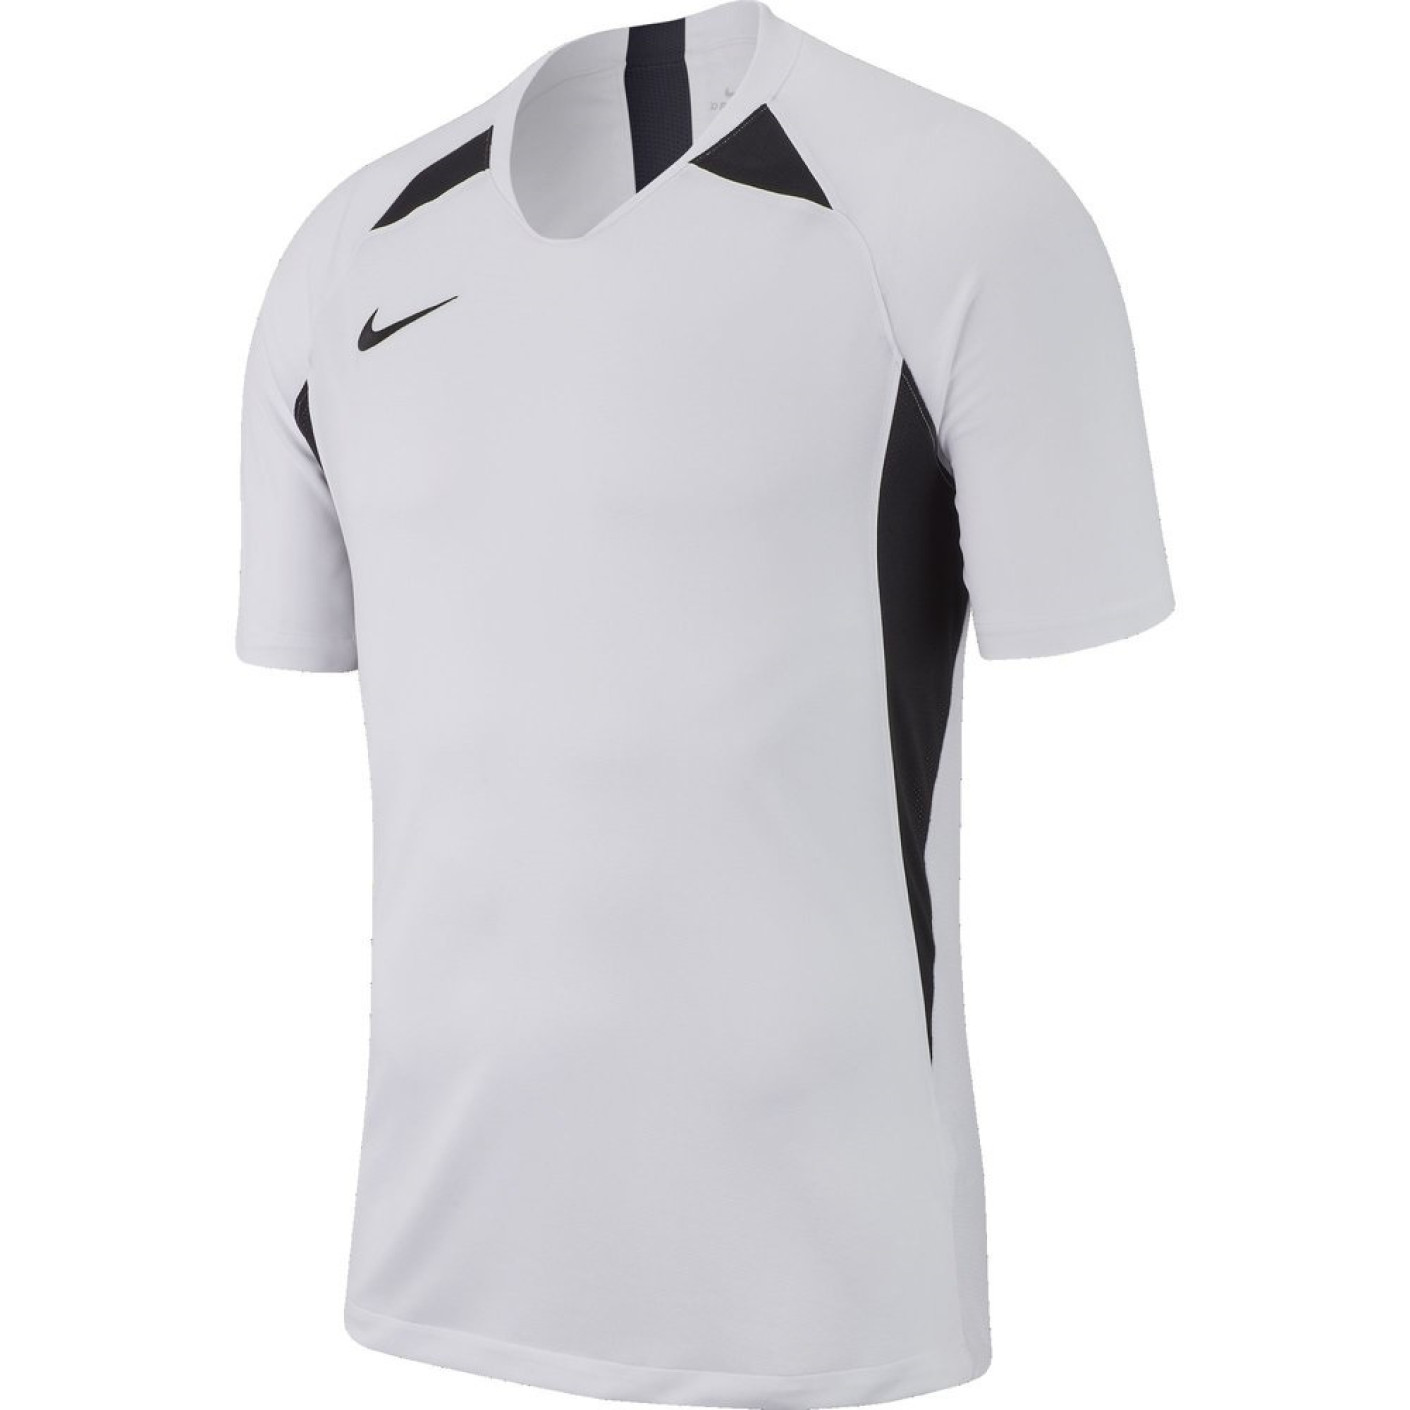 Nike Dri-FIT Legend Voetbalshirt Wit Zwart